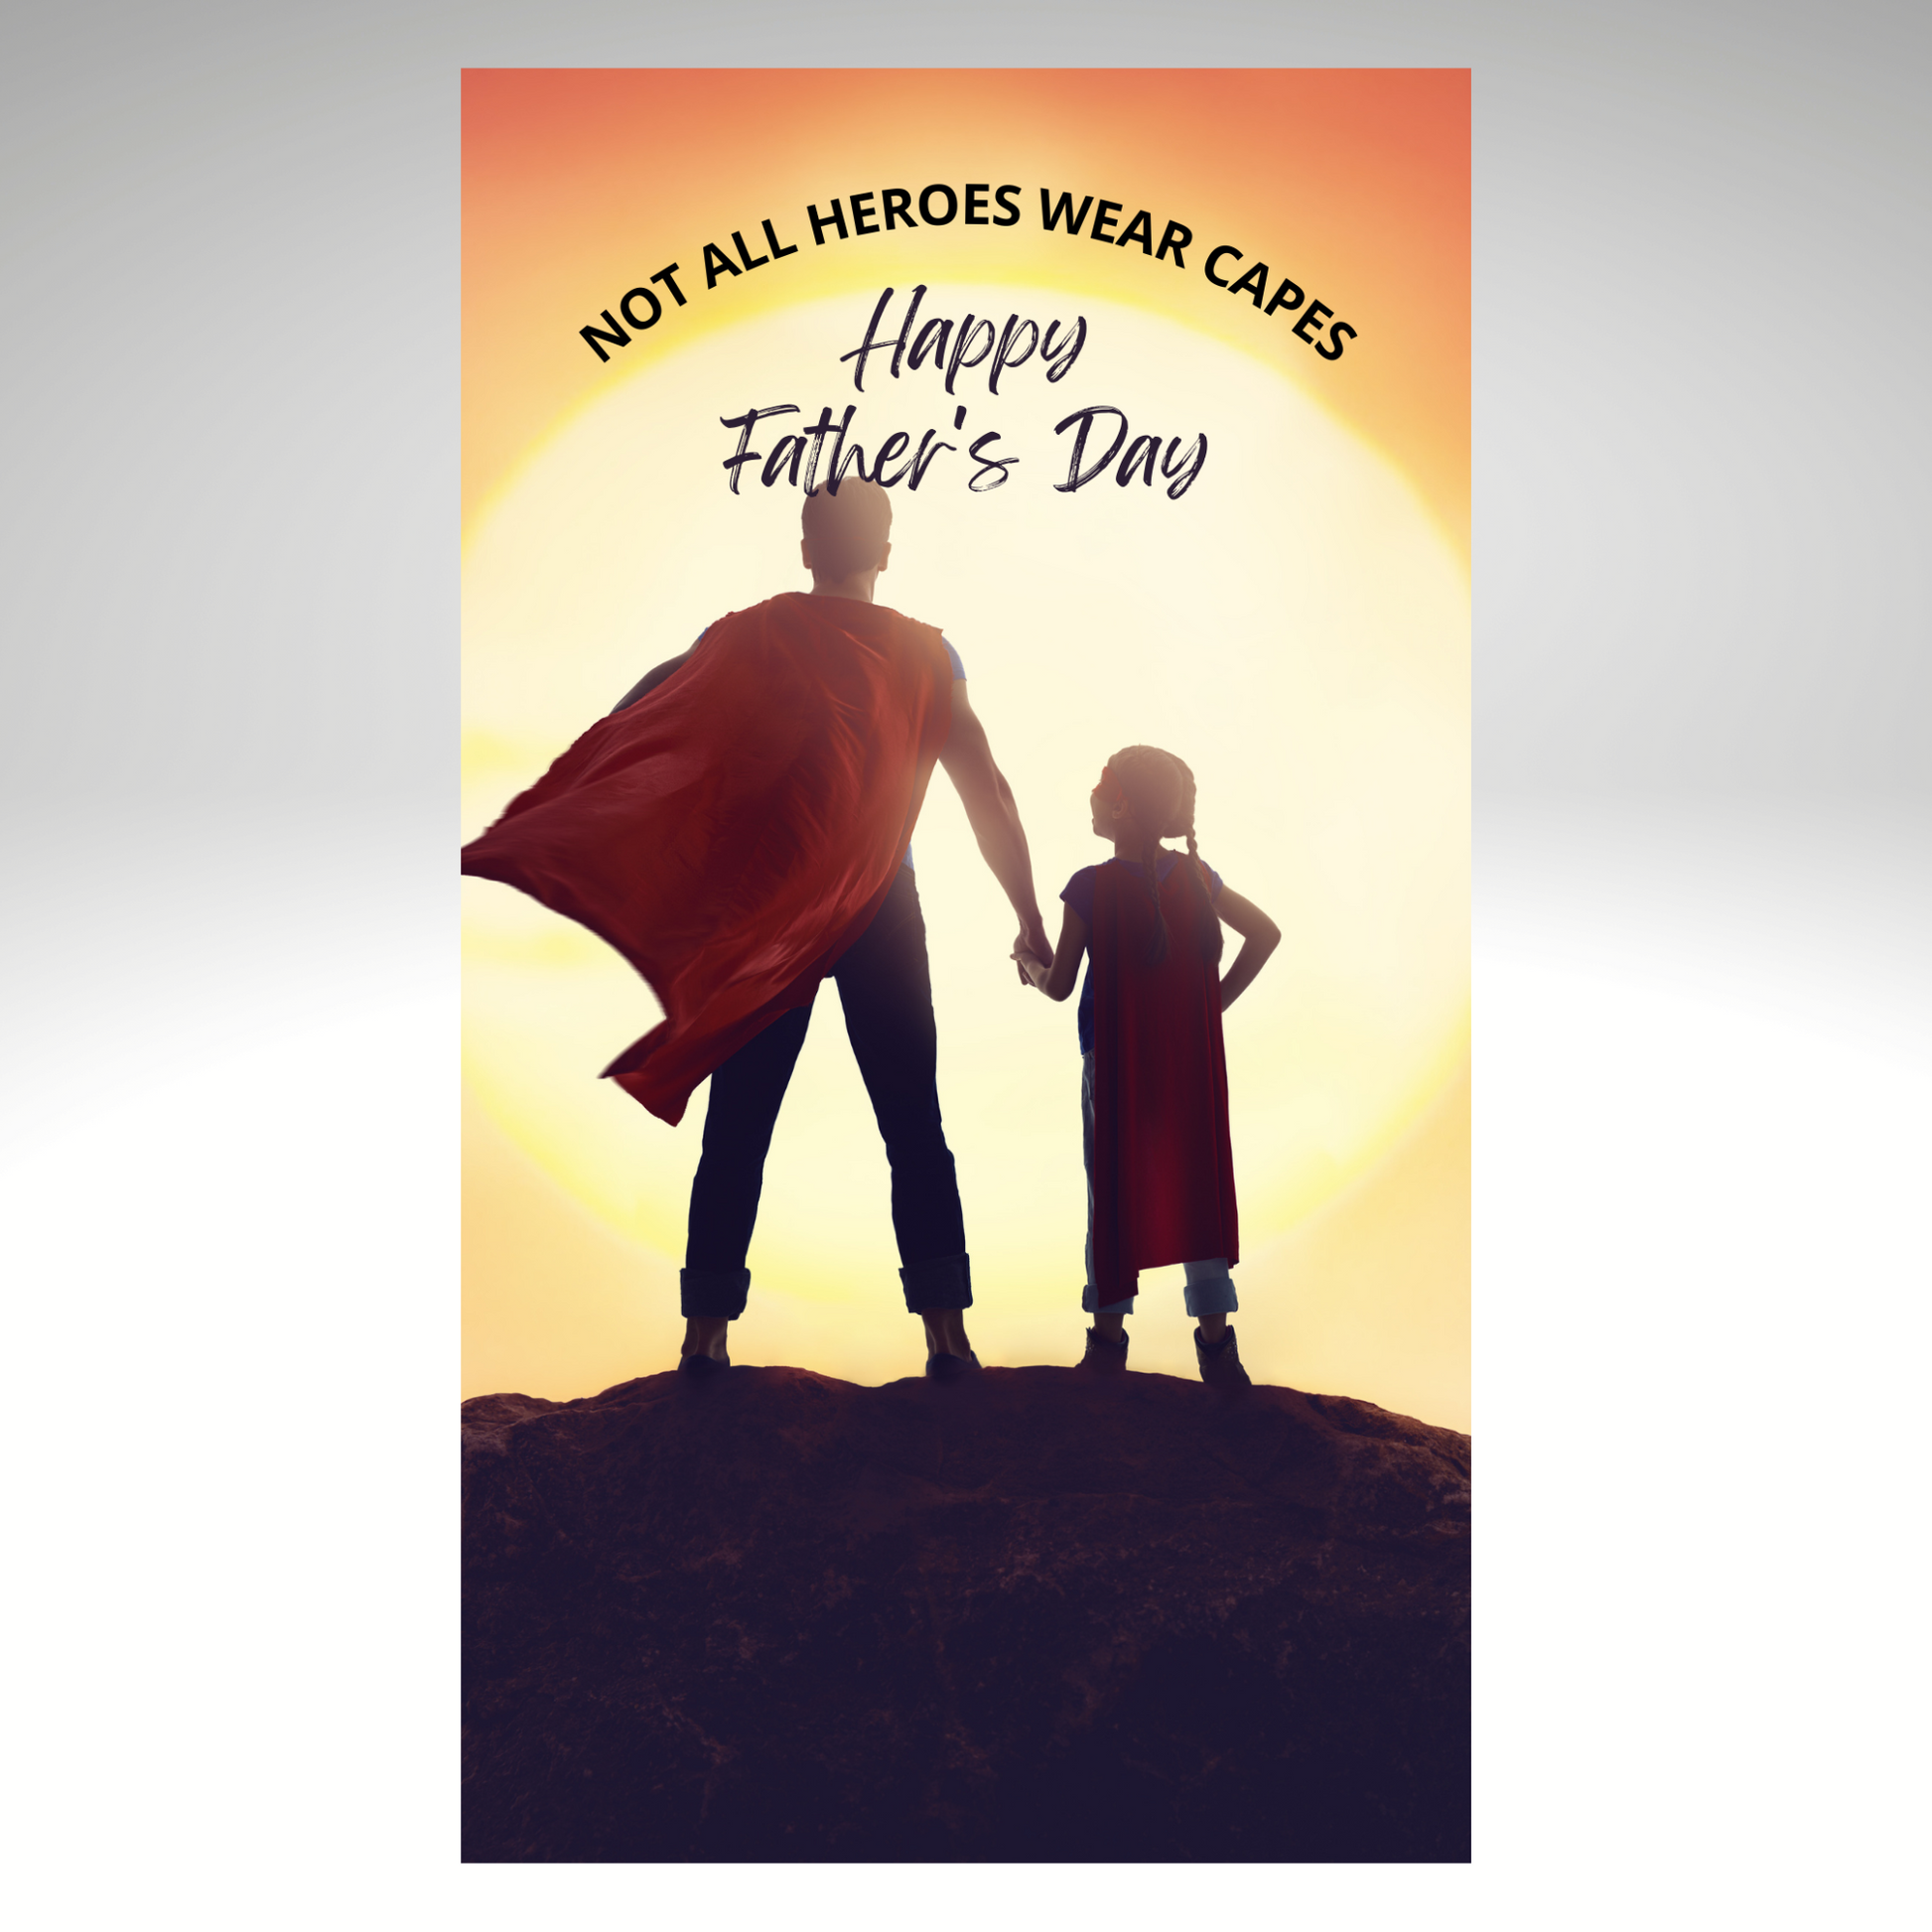 Fathers Day E-Card - Superhero MP4 Video Message